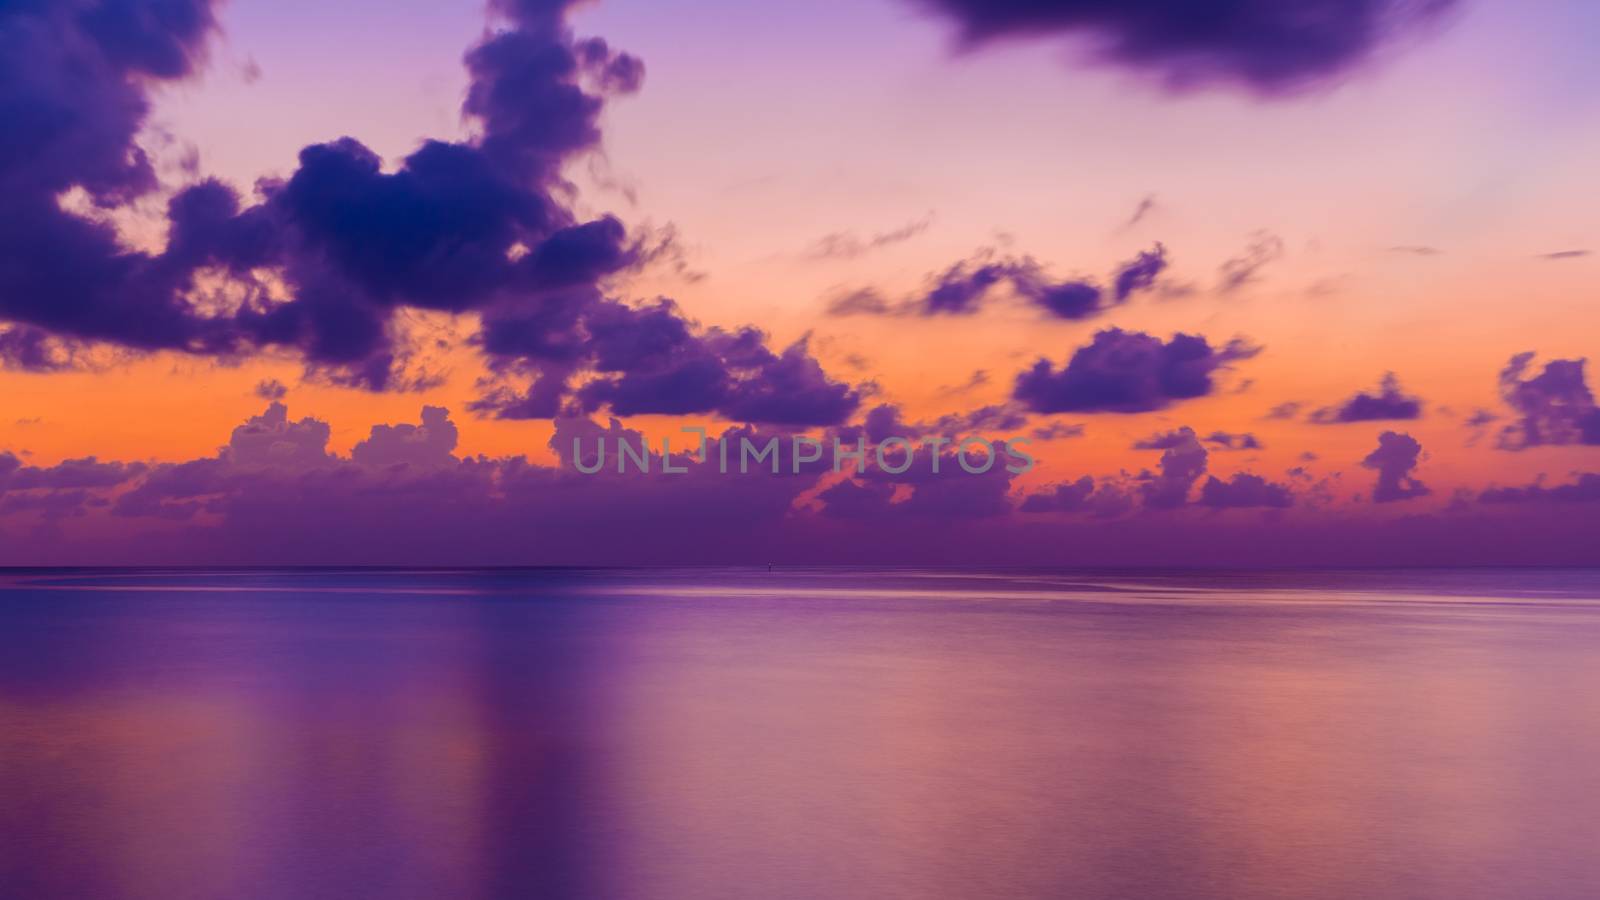 Sunset on the horizon in purple and orange.